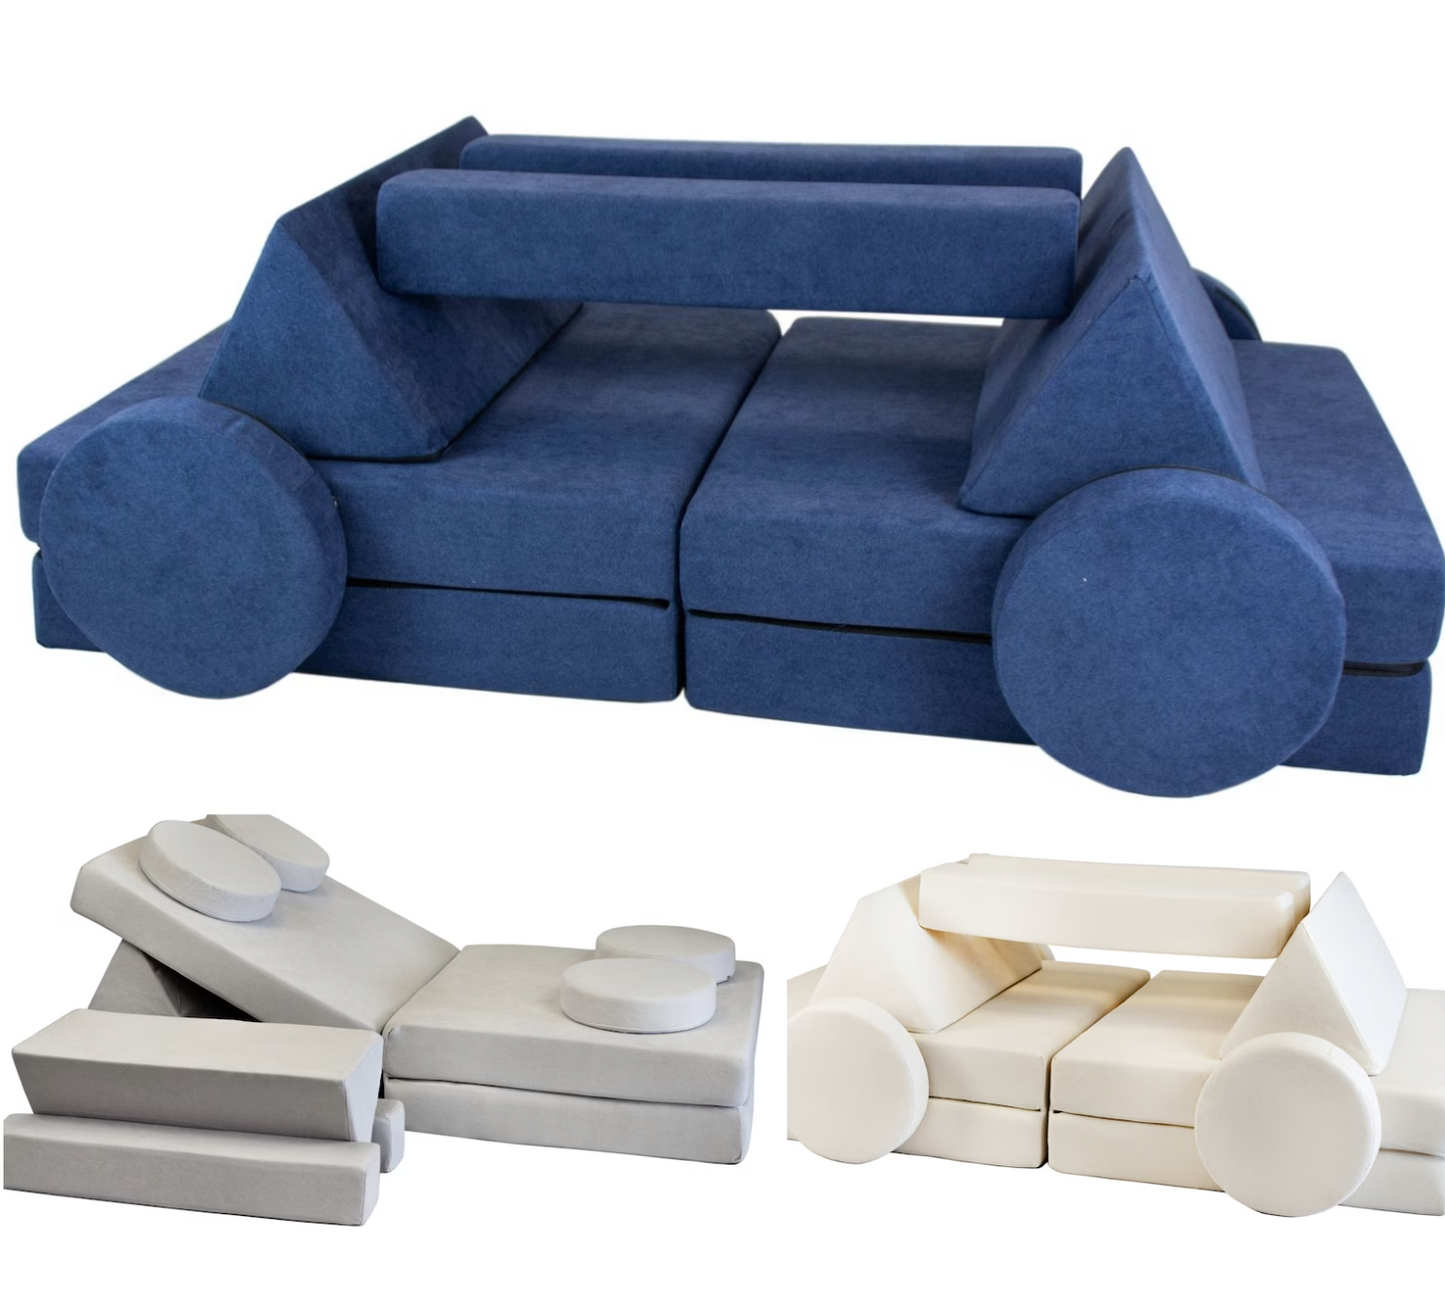 Soft Play Sofa Set: Cozy and Safe for Kids